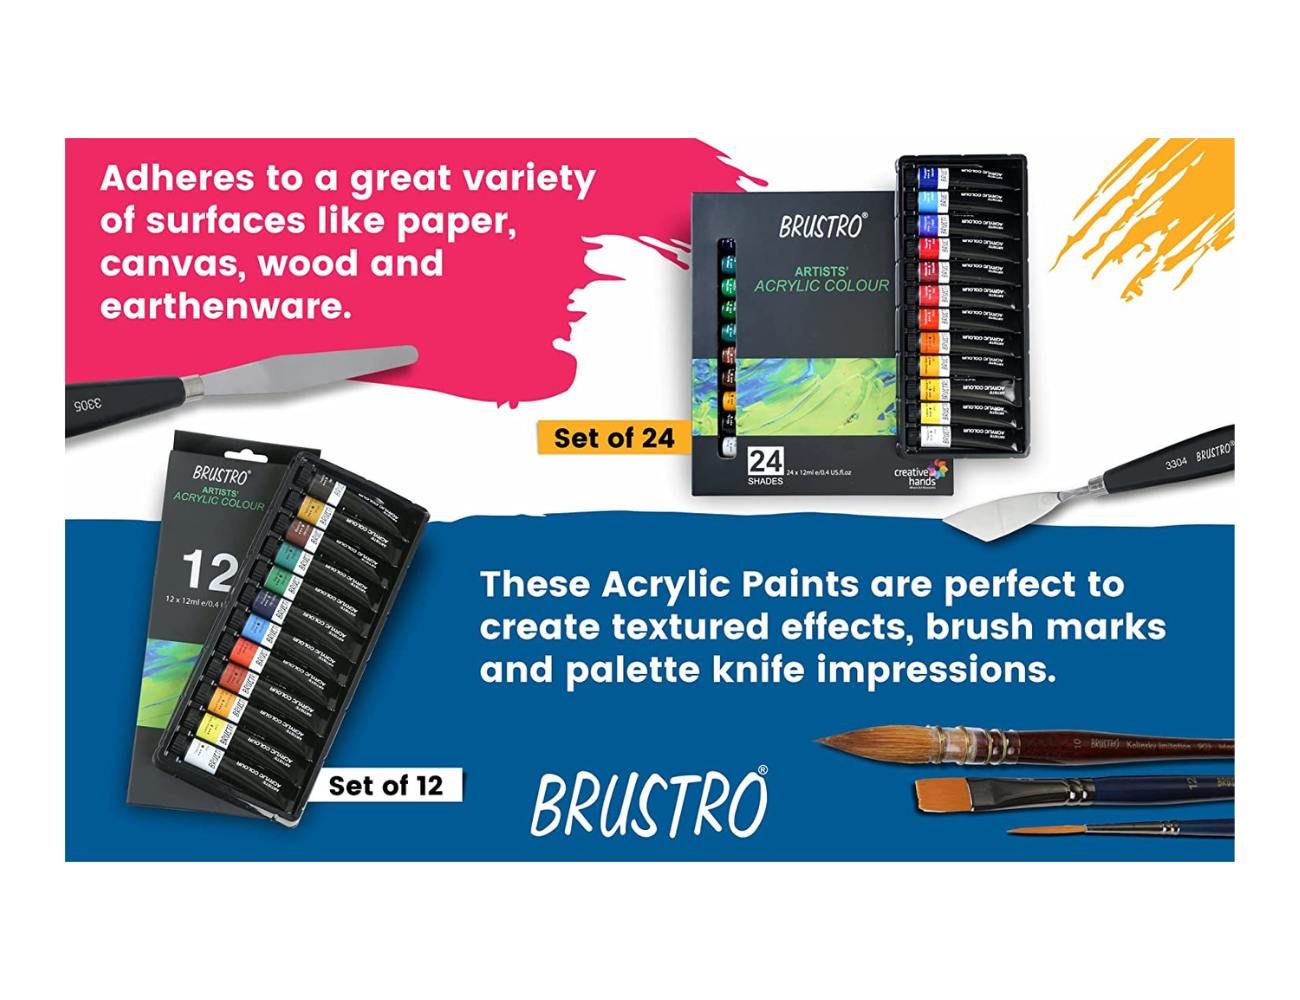 BRUSTRO Artists Acrylic Colour Set of 12 Colours X 12ML Tubes